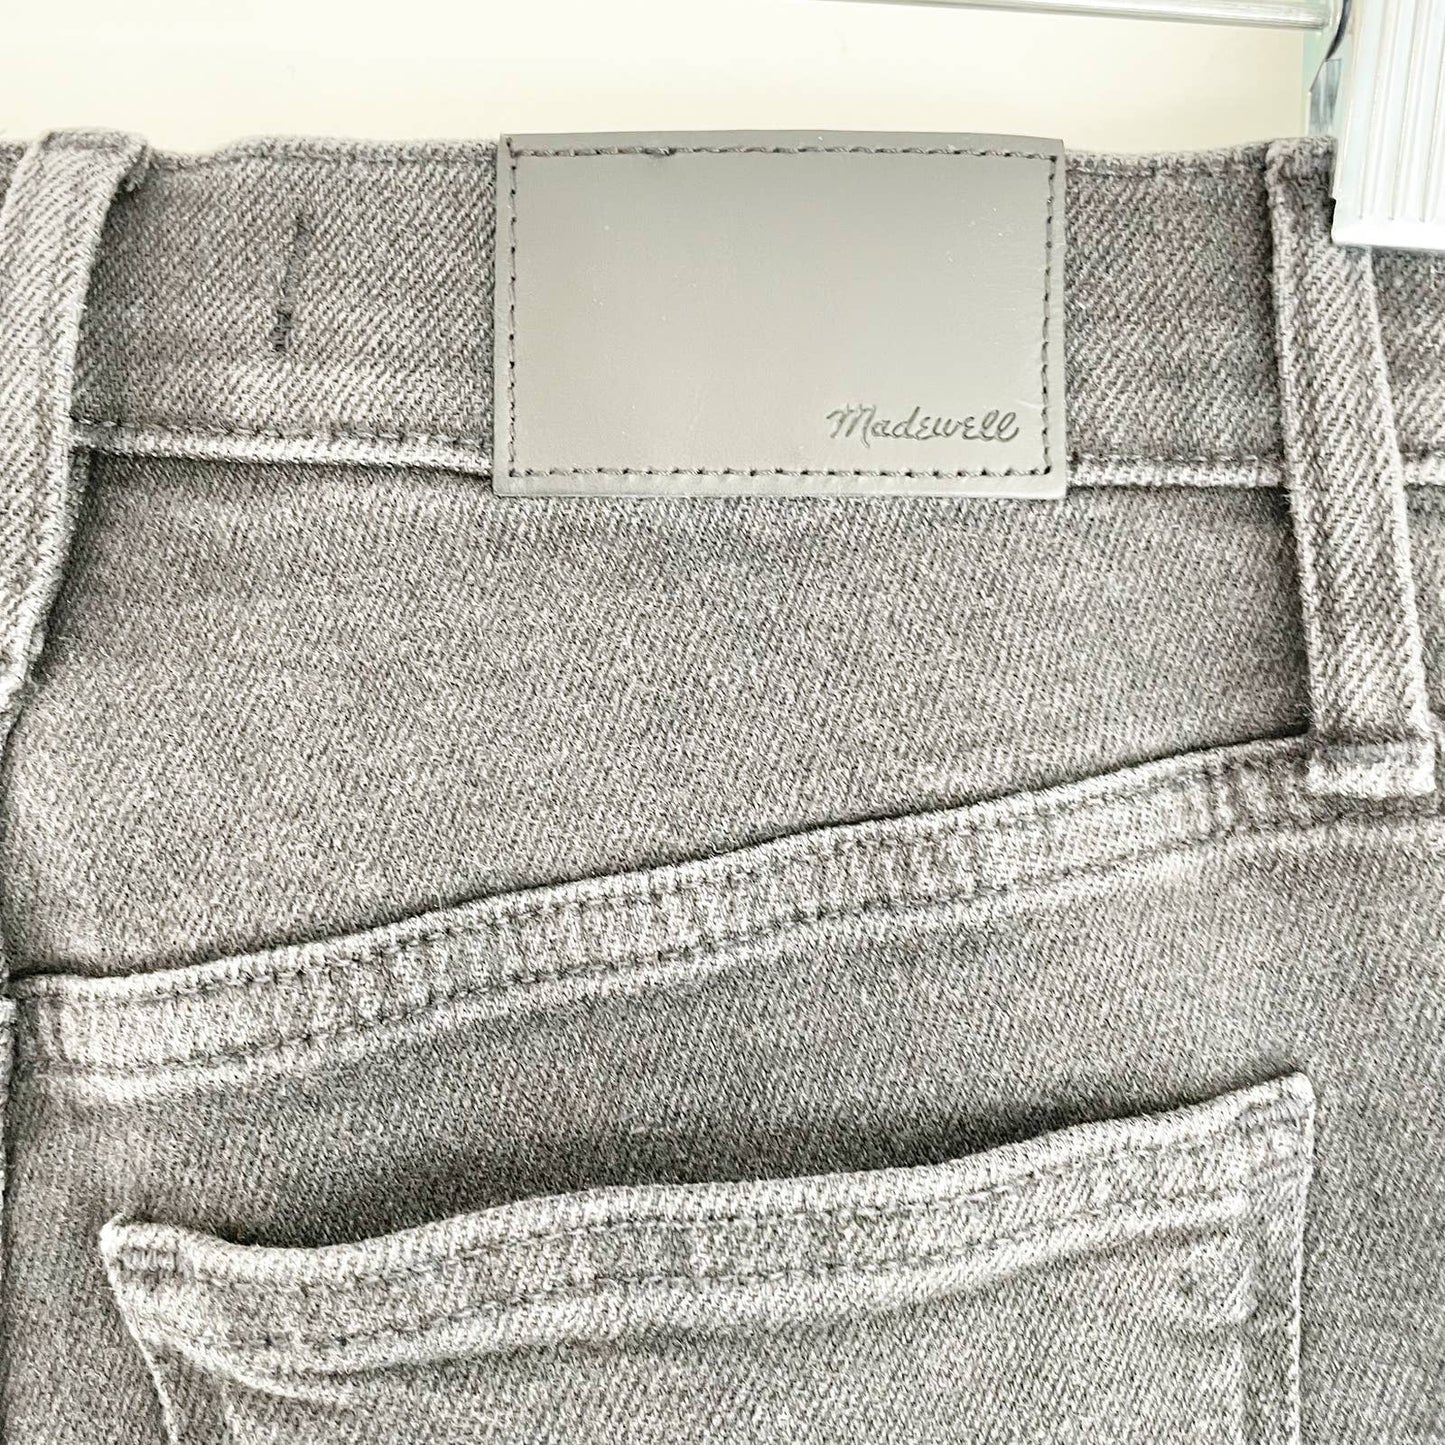 Madewell 10" High-Rise Skinny Jeans in Starkey Wash Black 28